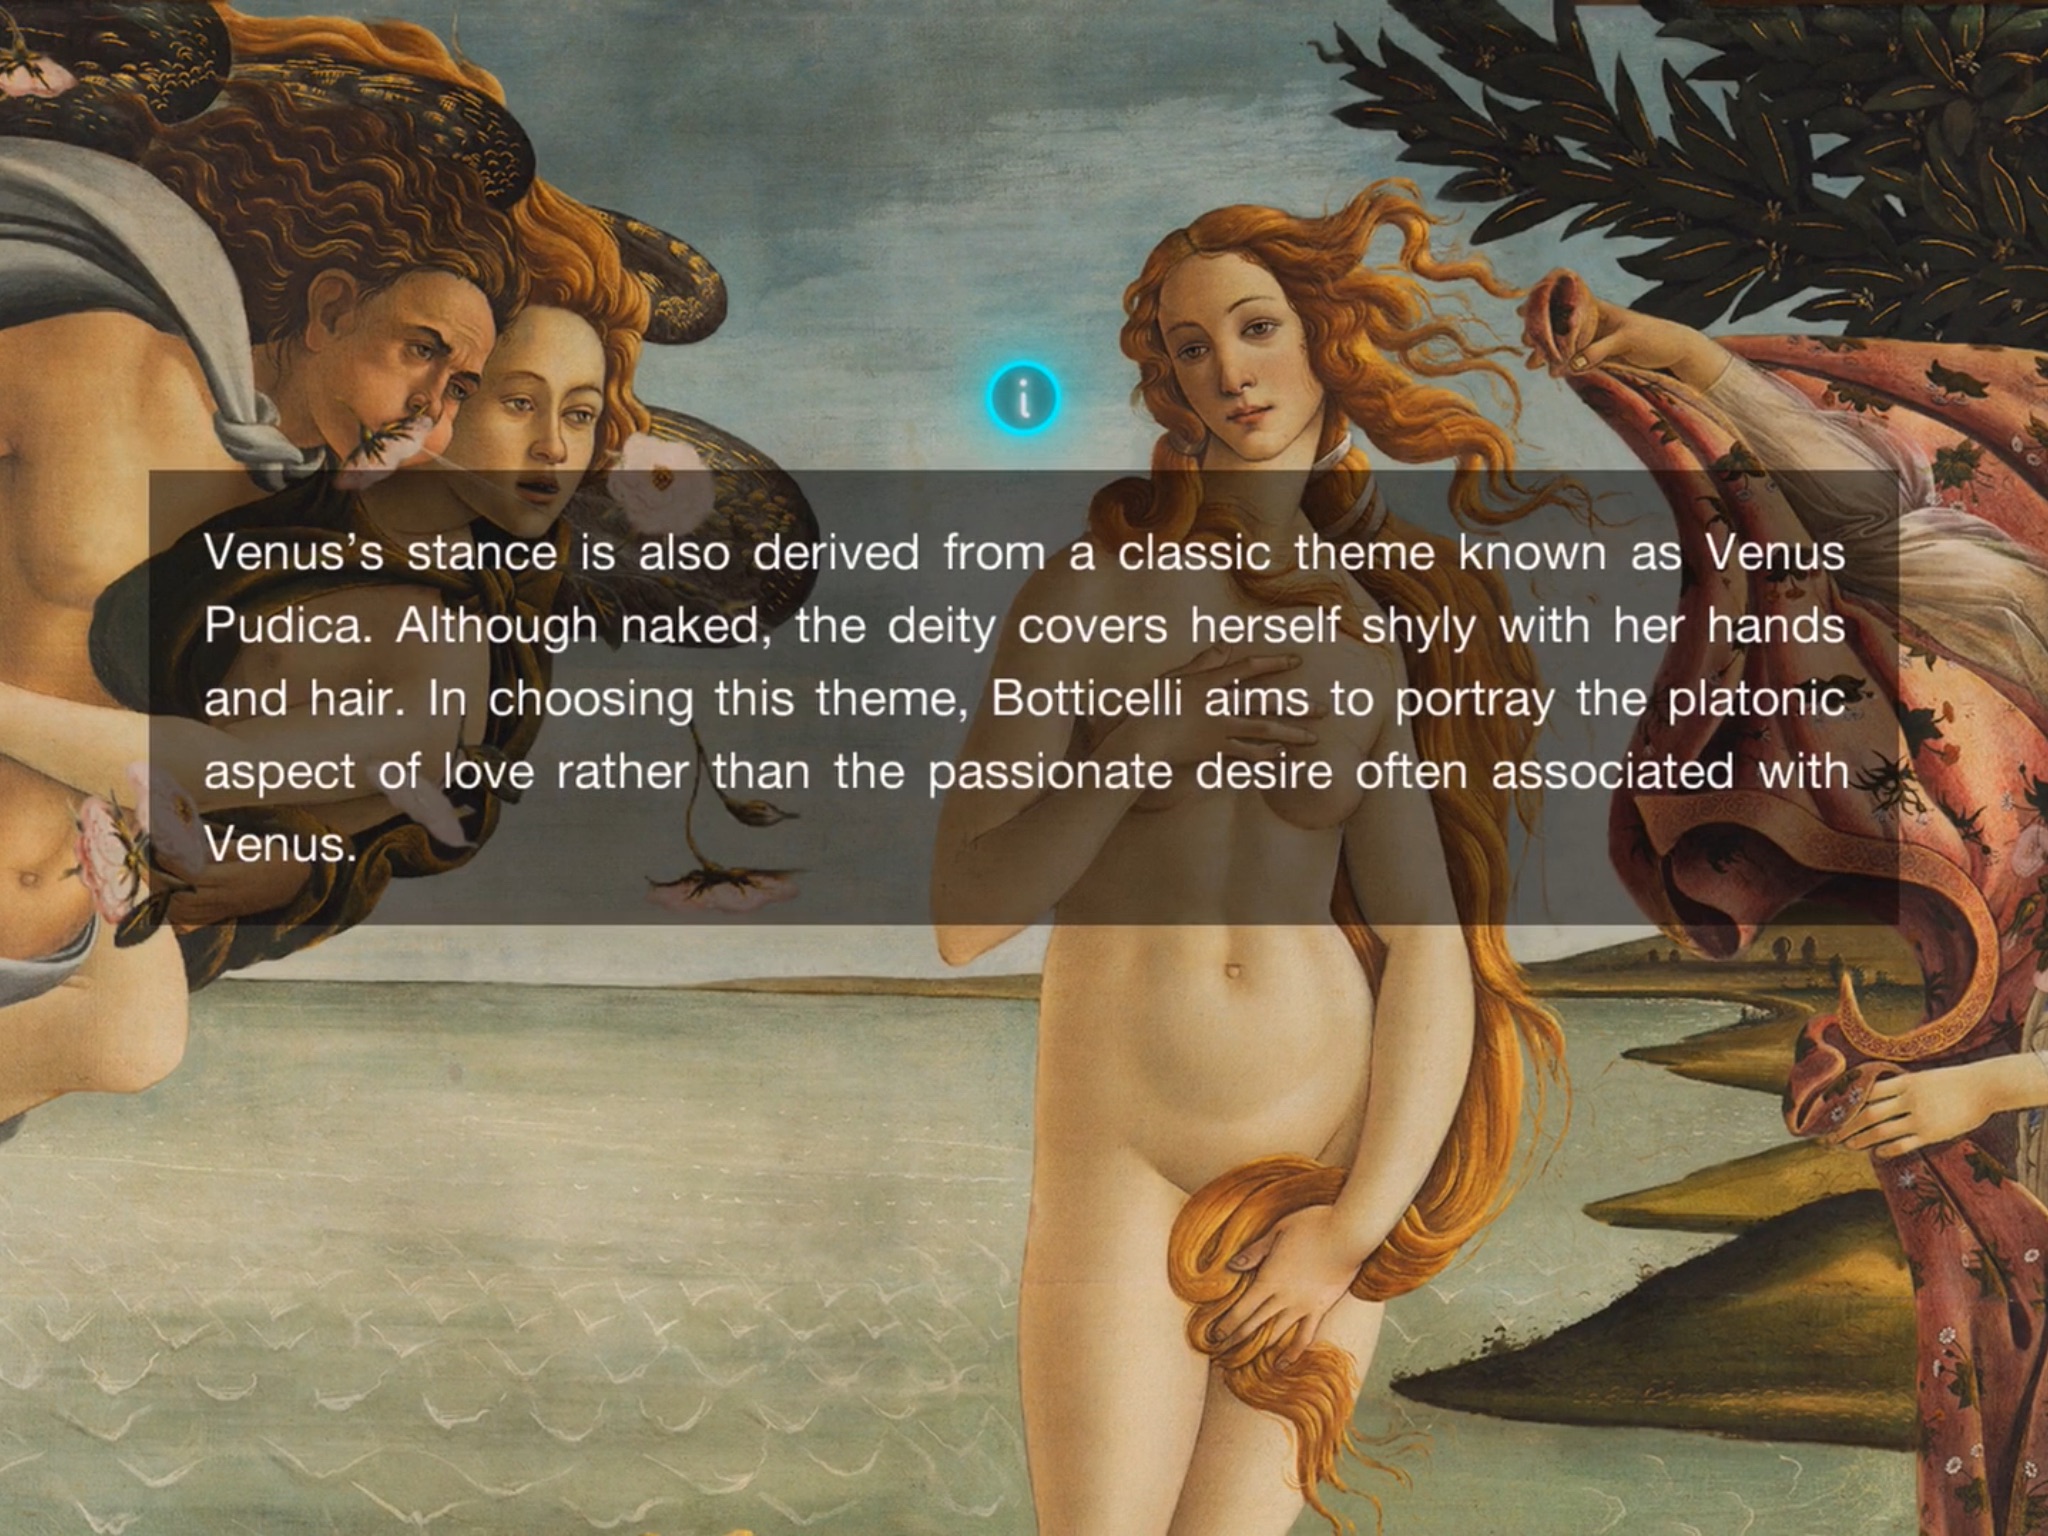 Birth of Venus - Art Legacy - Art History through famous Paintings - App by LANDKA ®